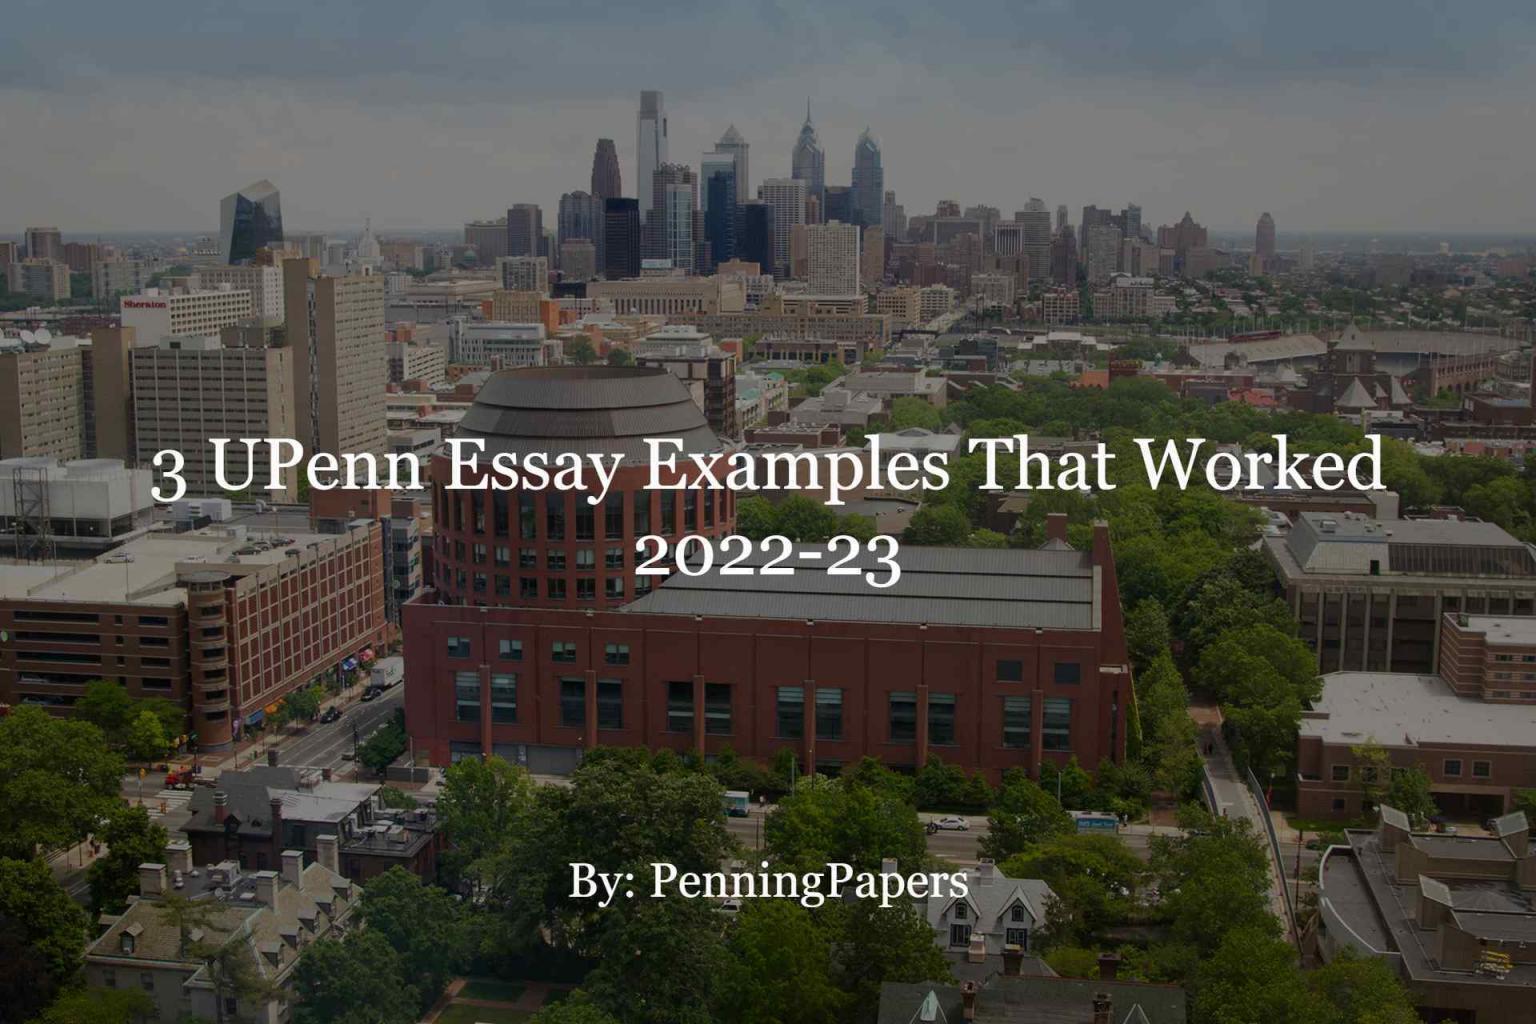 upenn specific essay